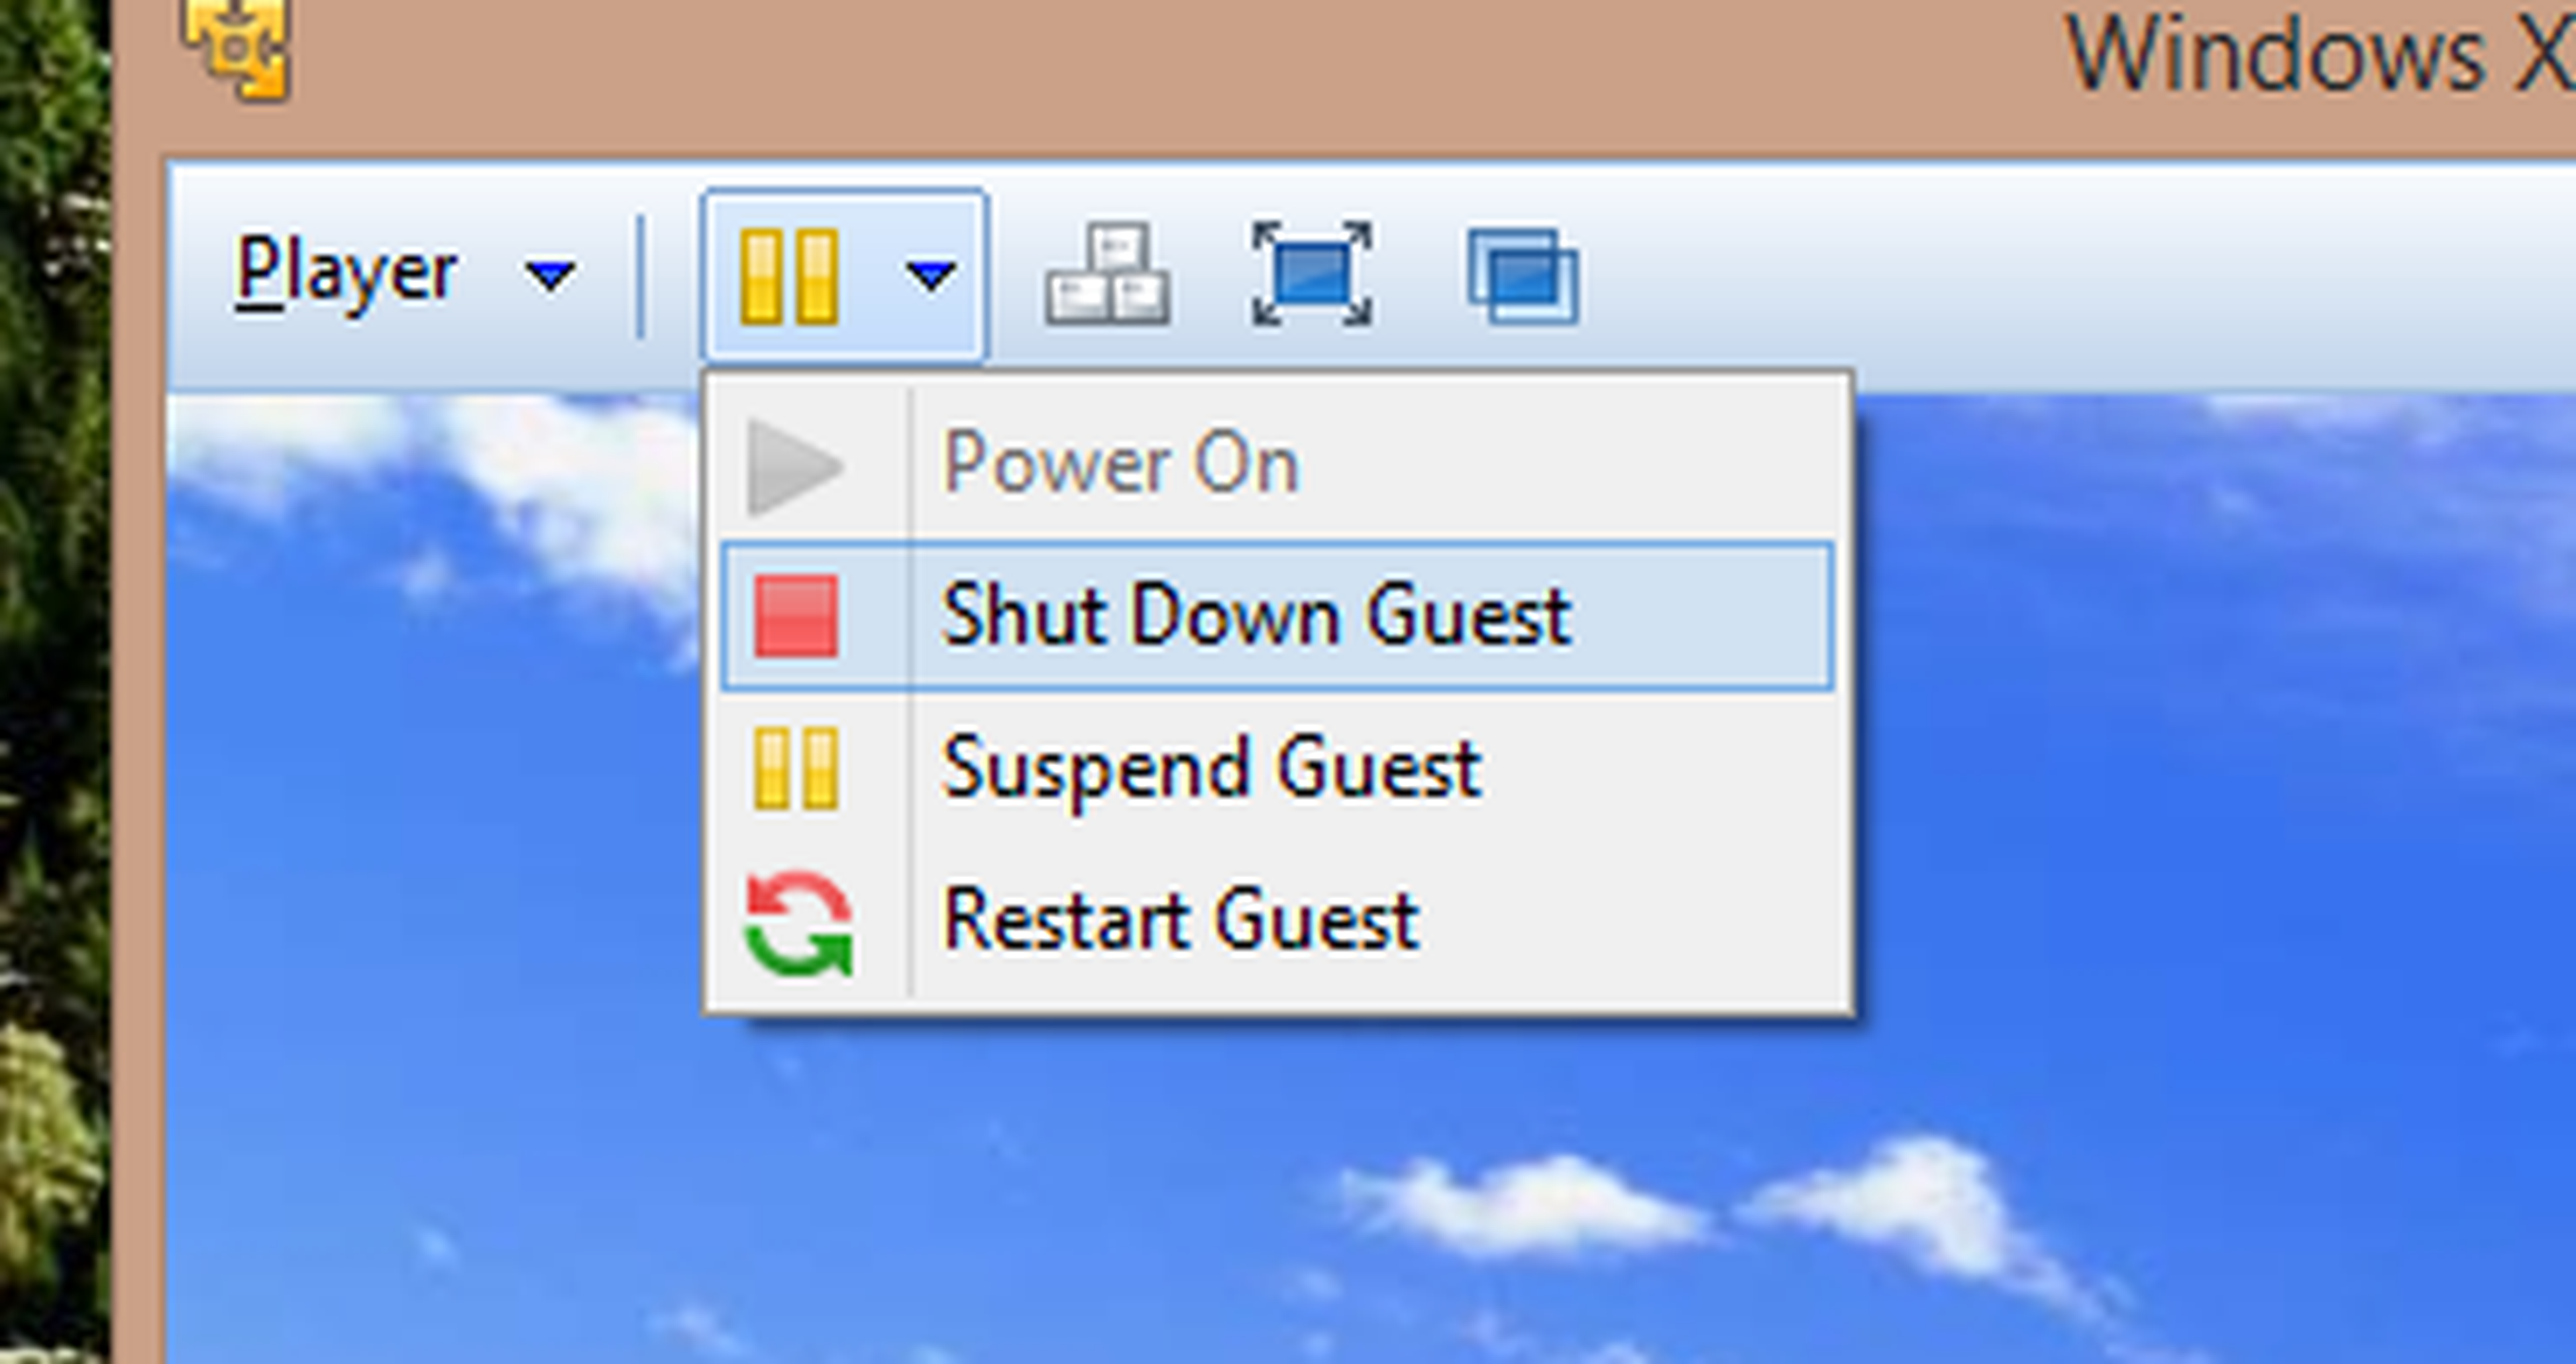 Shut down guest